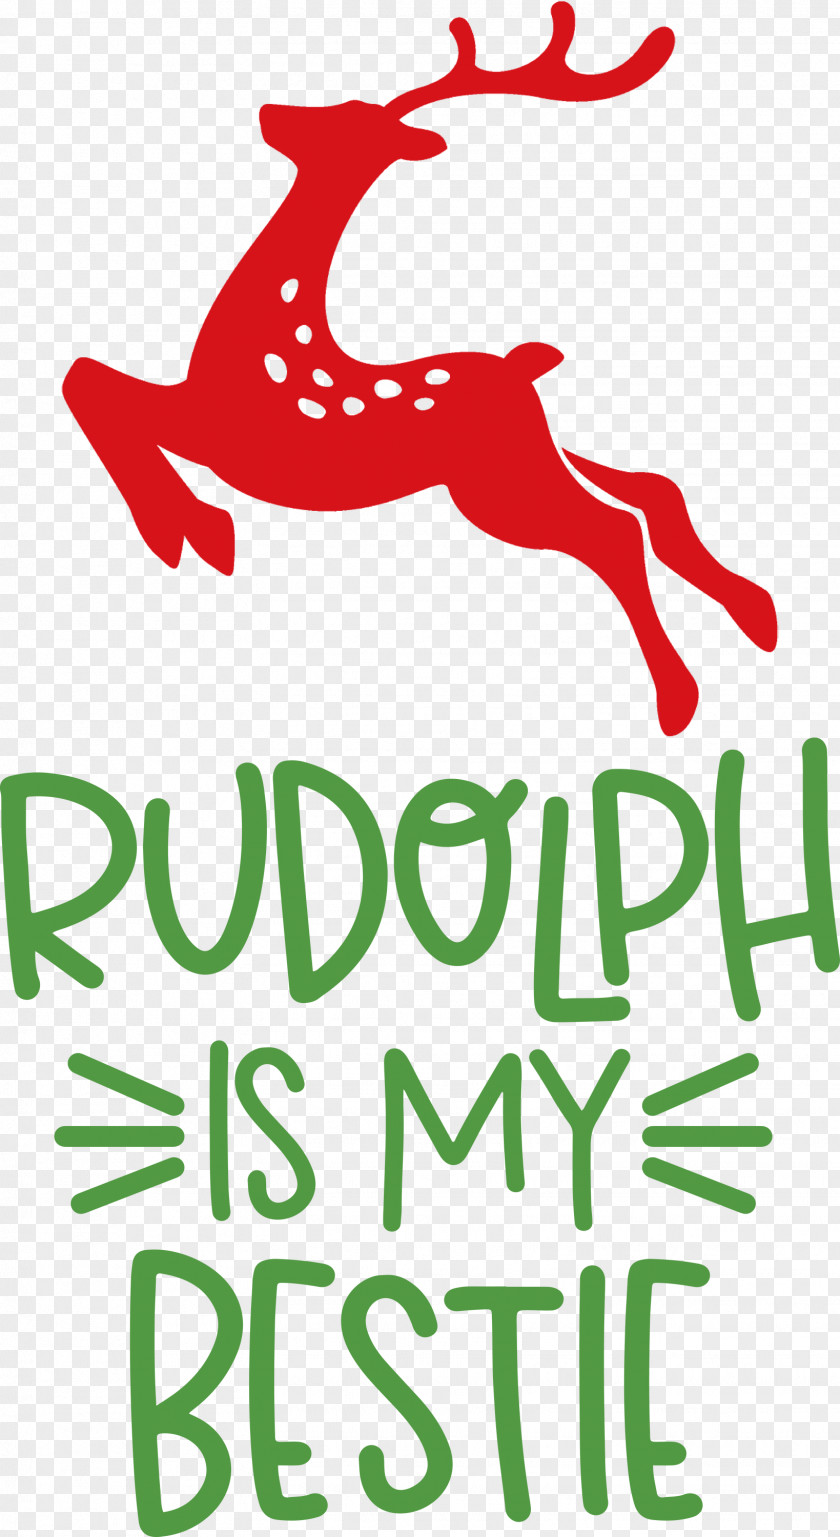 Rudolph Is My Bestie Deer PNG